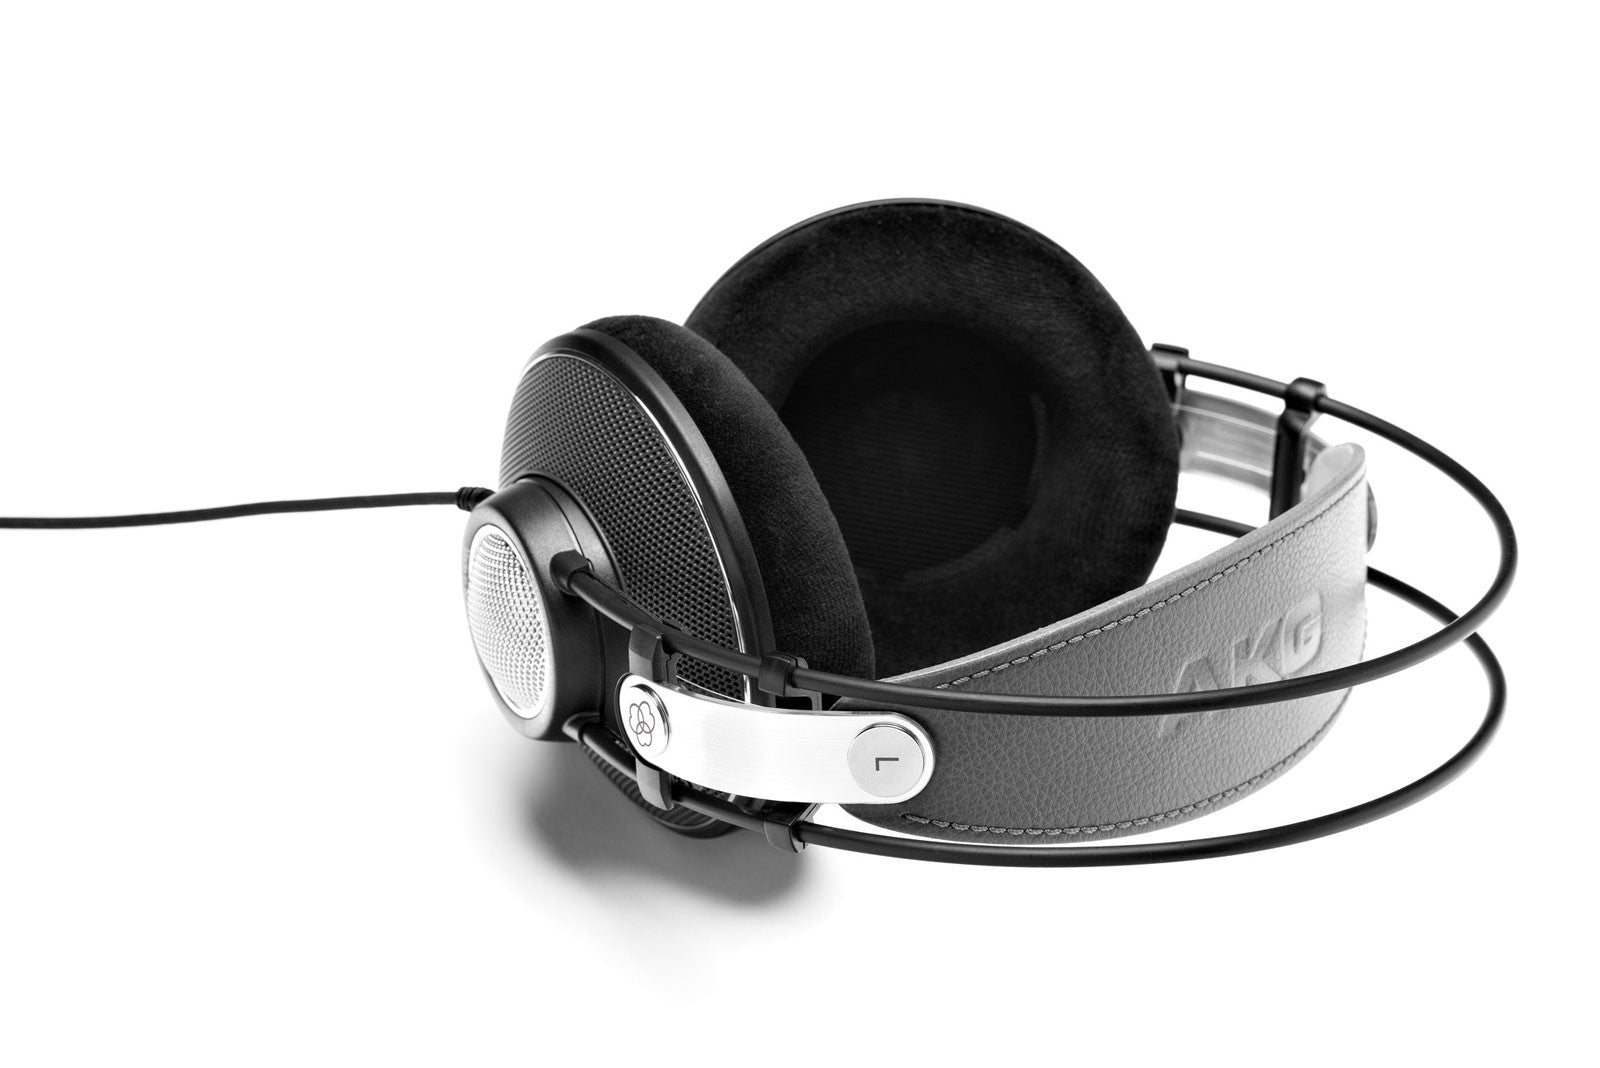 AKG K612 PRO Reference Studio Headphones